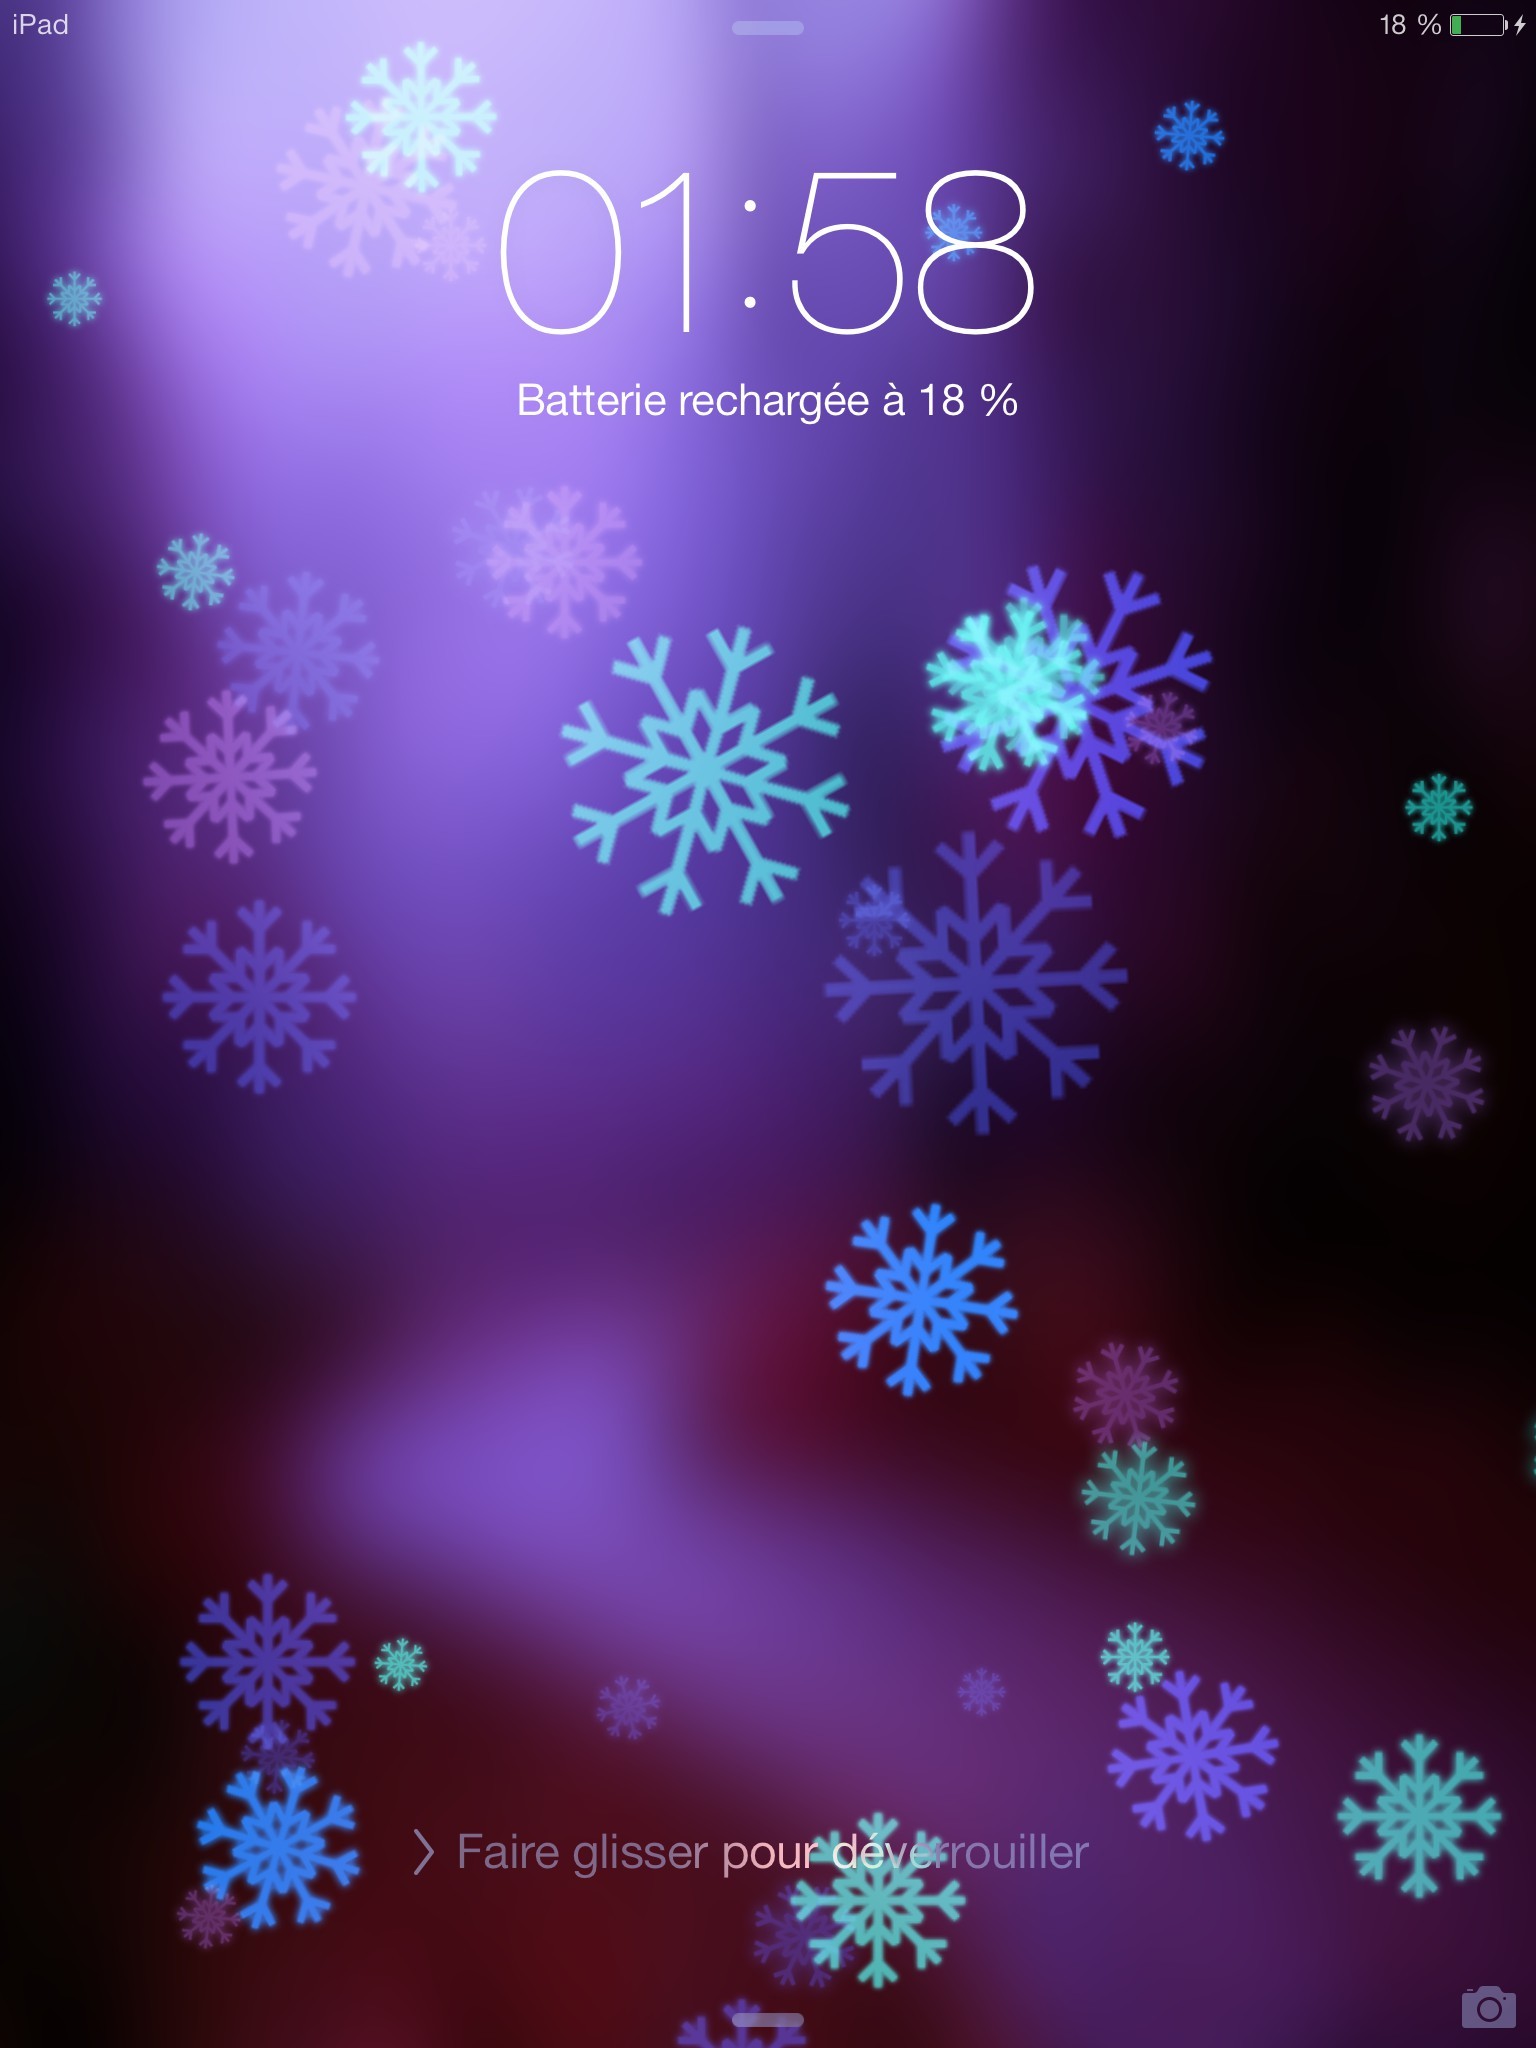 1536x2048 08 iPad HD Snowdynamic Wallpaper for iOS 7 - 1.1 - Themes